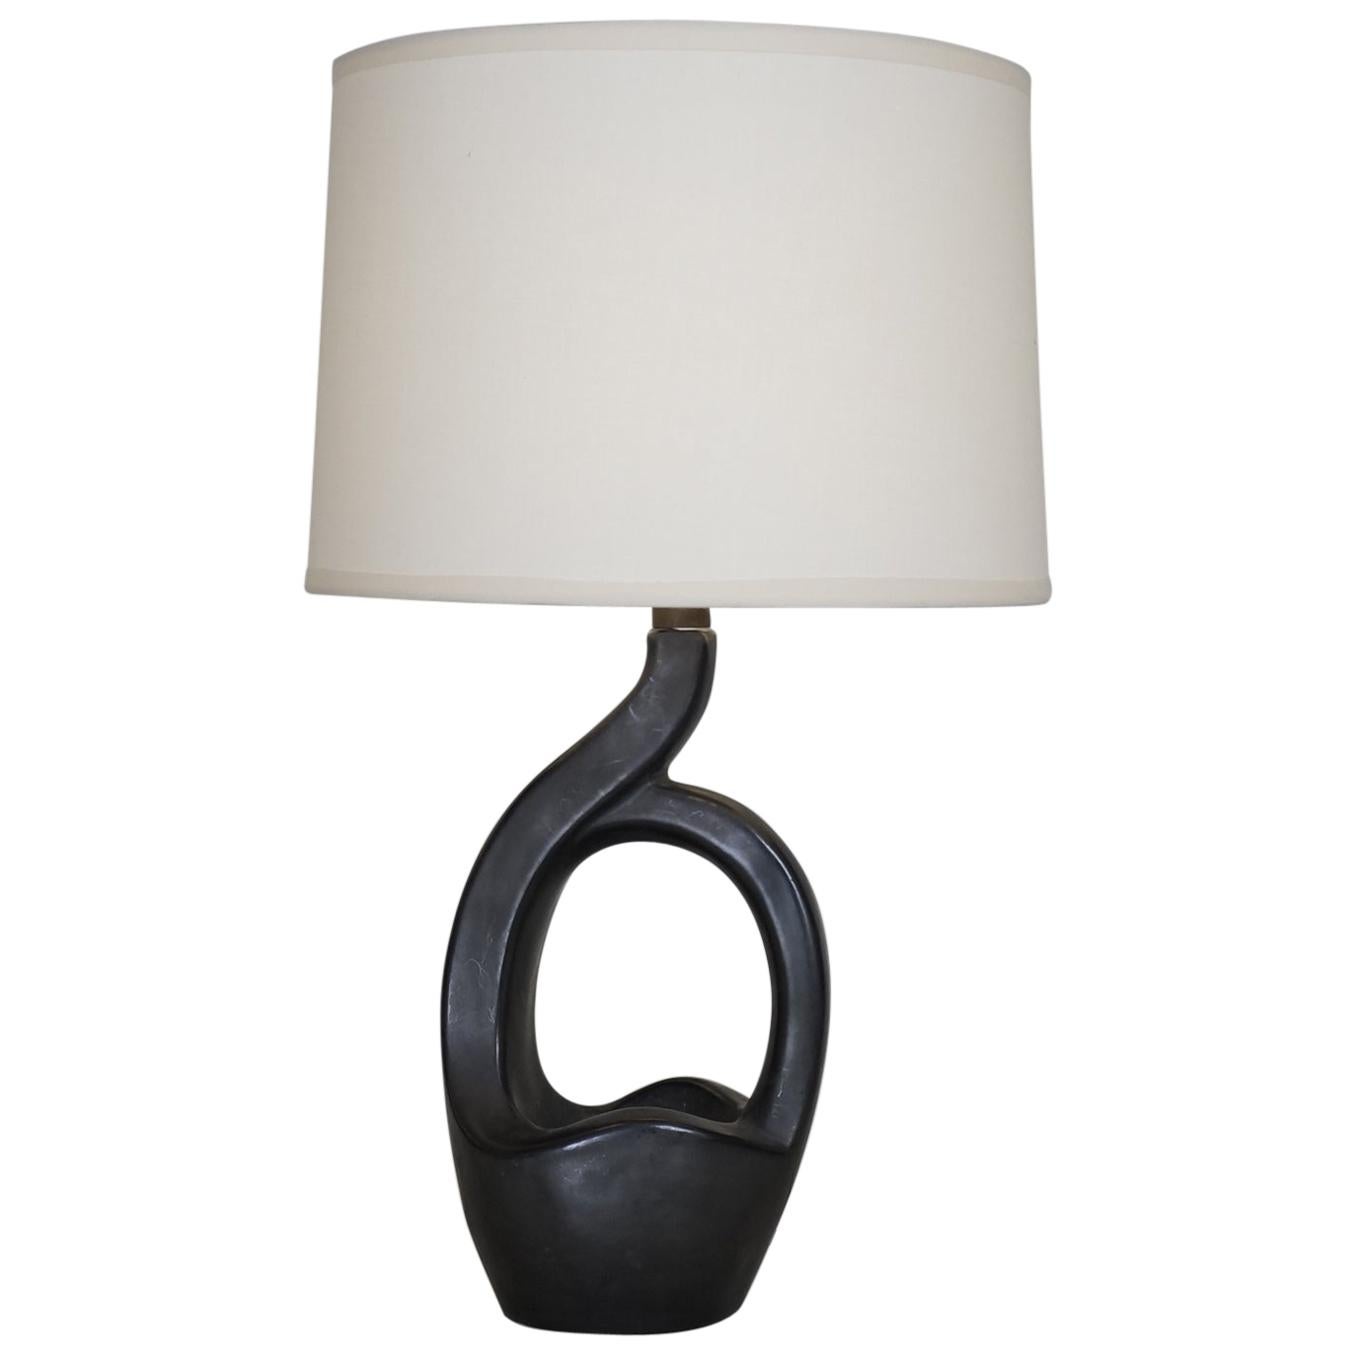 20th Century Black Enameled Ceramic Table Lamp For Sale